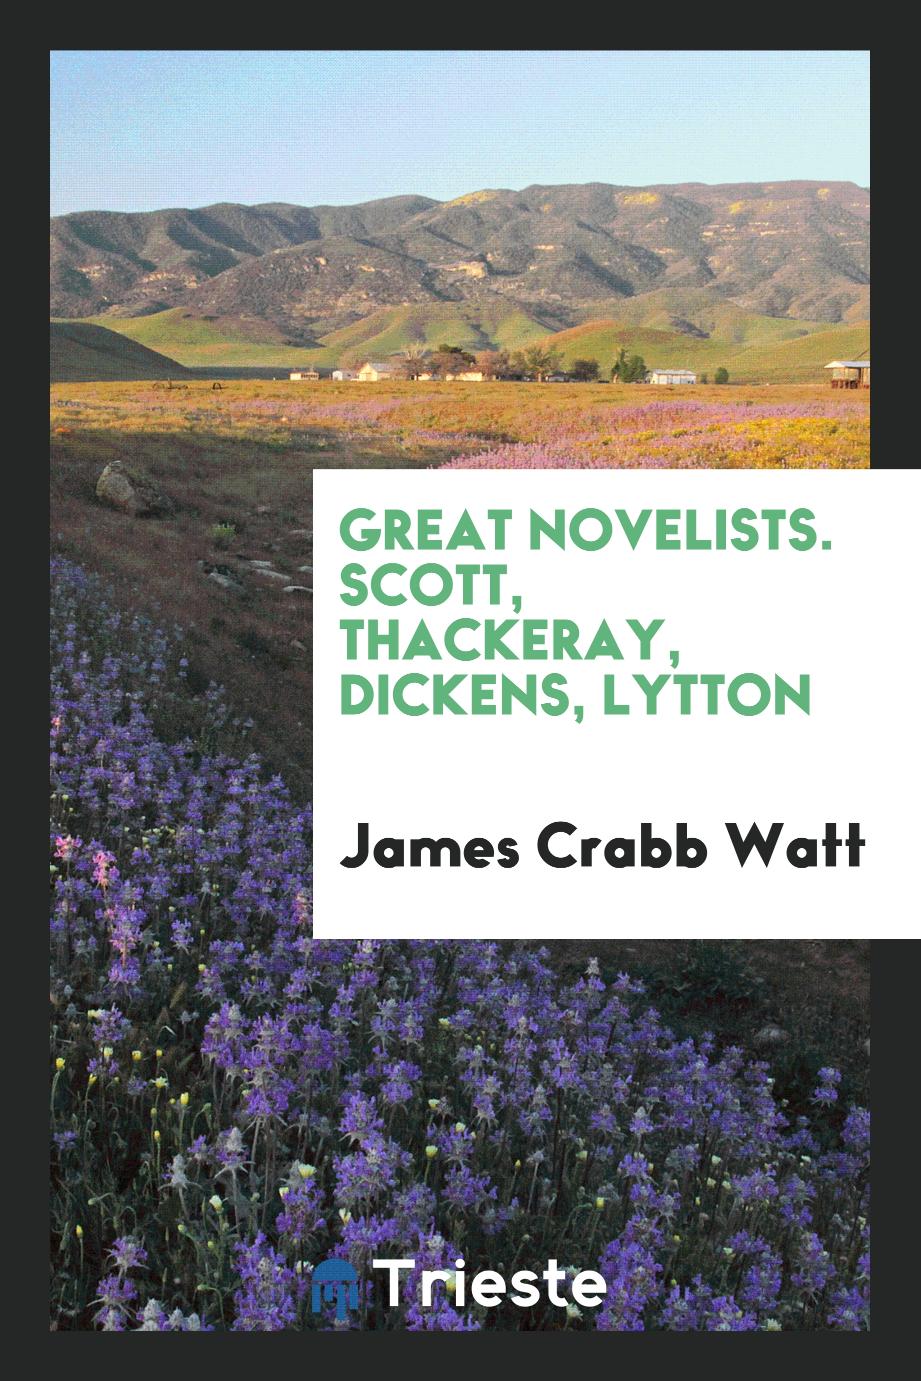 Great novelists. Scott, Thackeray, Dickens, Lytton